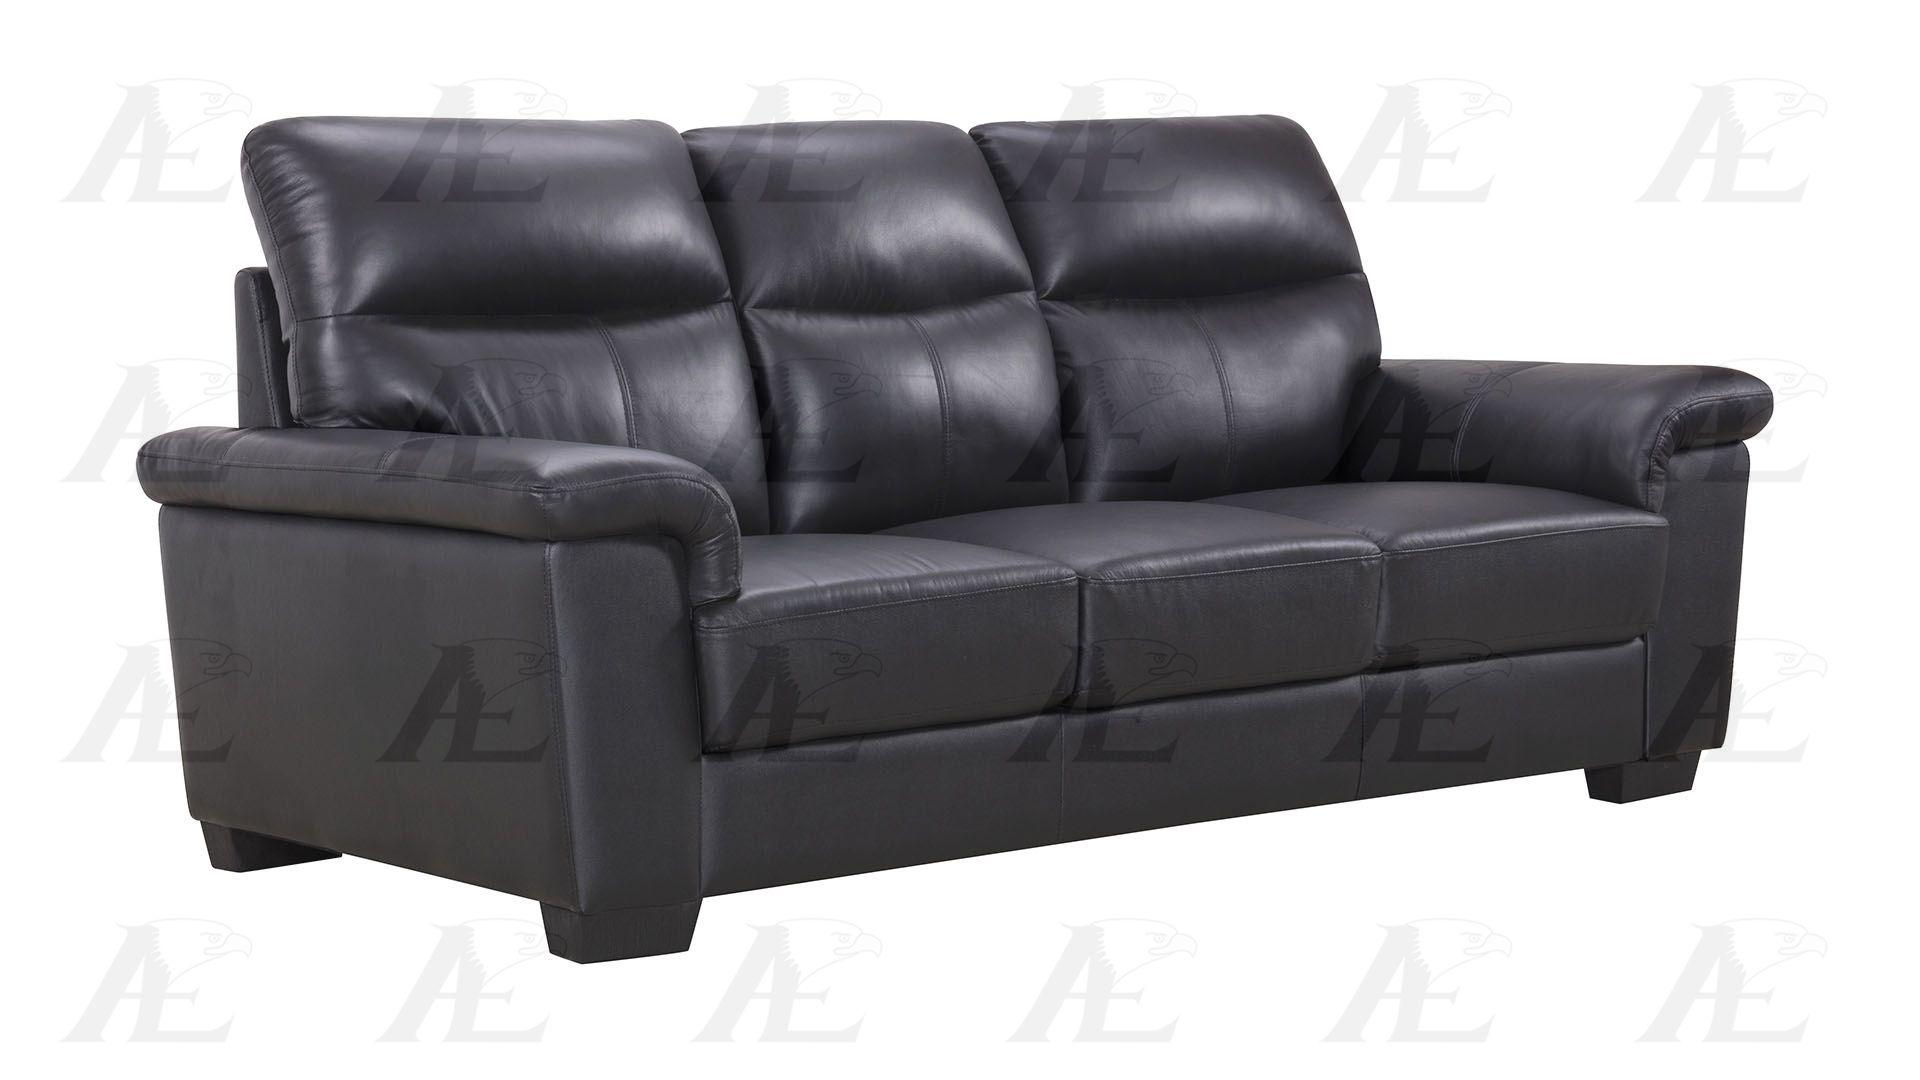 

    
American Eagle EK515 Black Genuine Leather Living Room Sofa Set 2pcs in Contemporary Style
